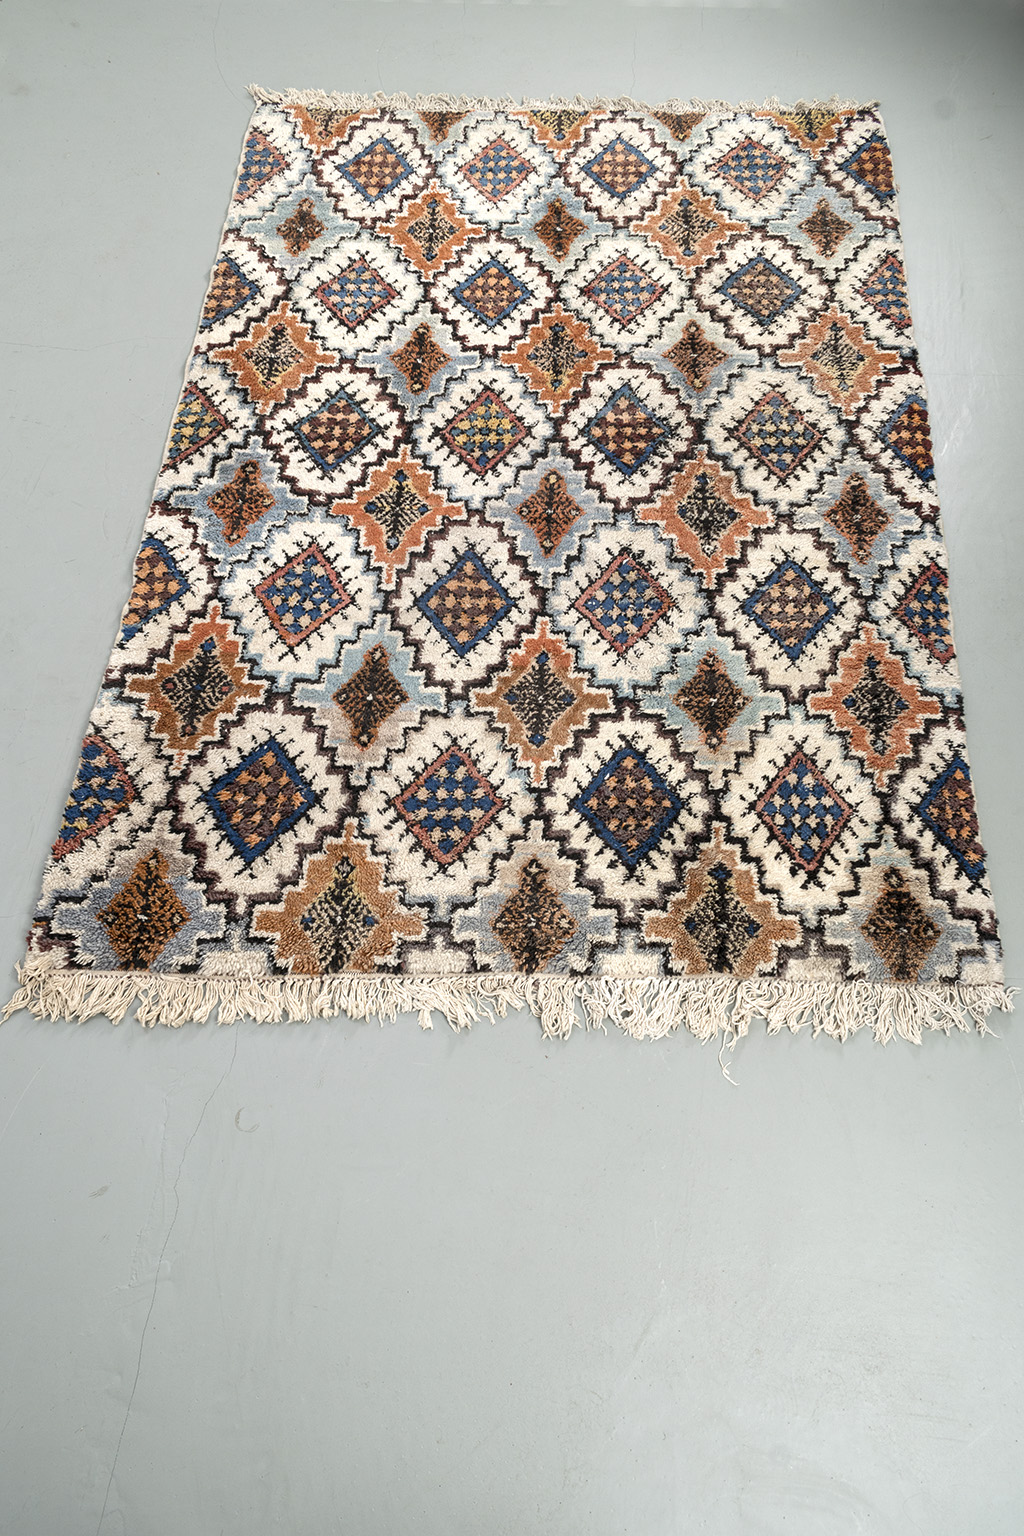 Big Maroccan carpet from Rabat